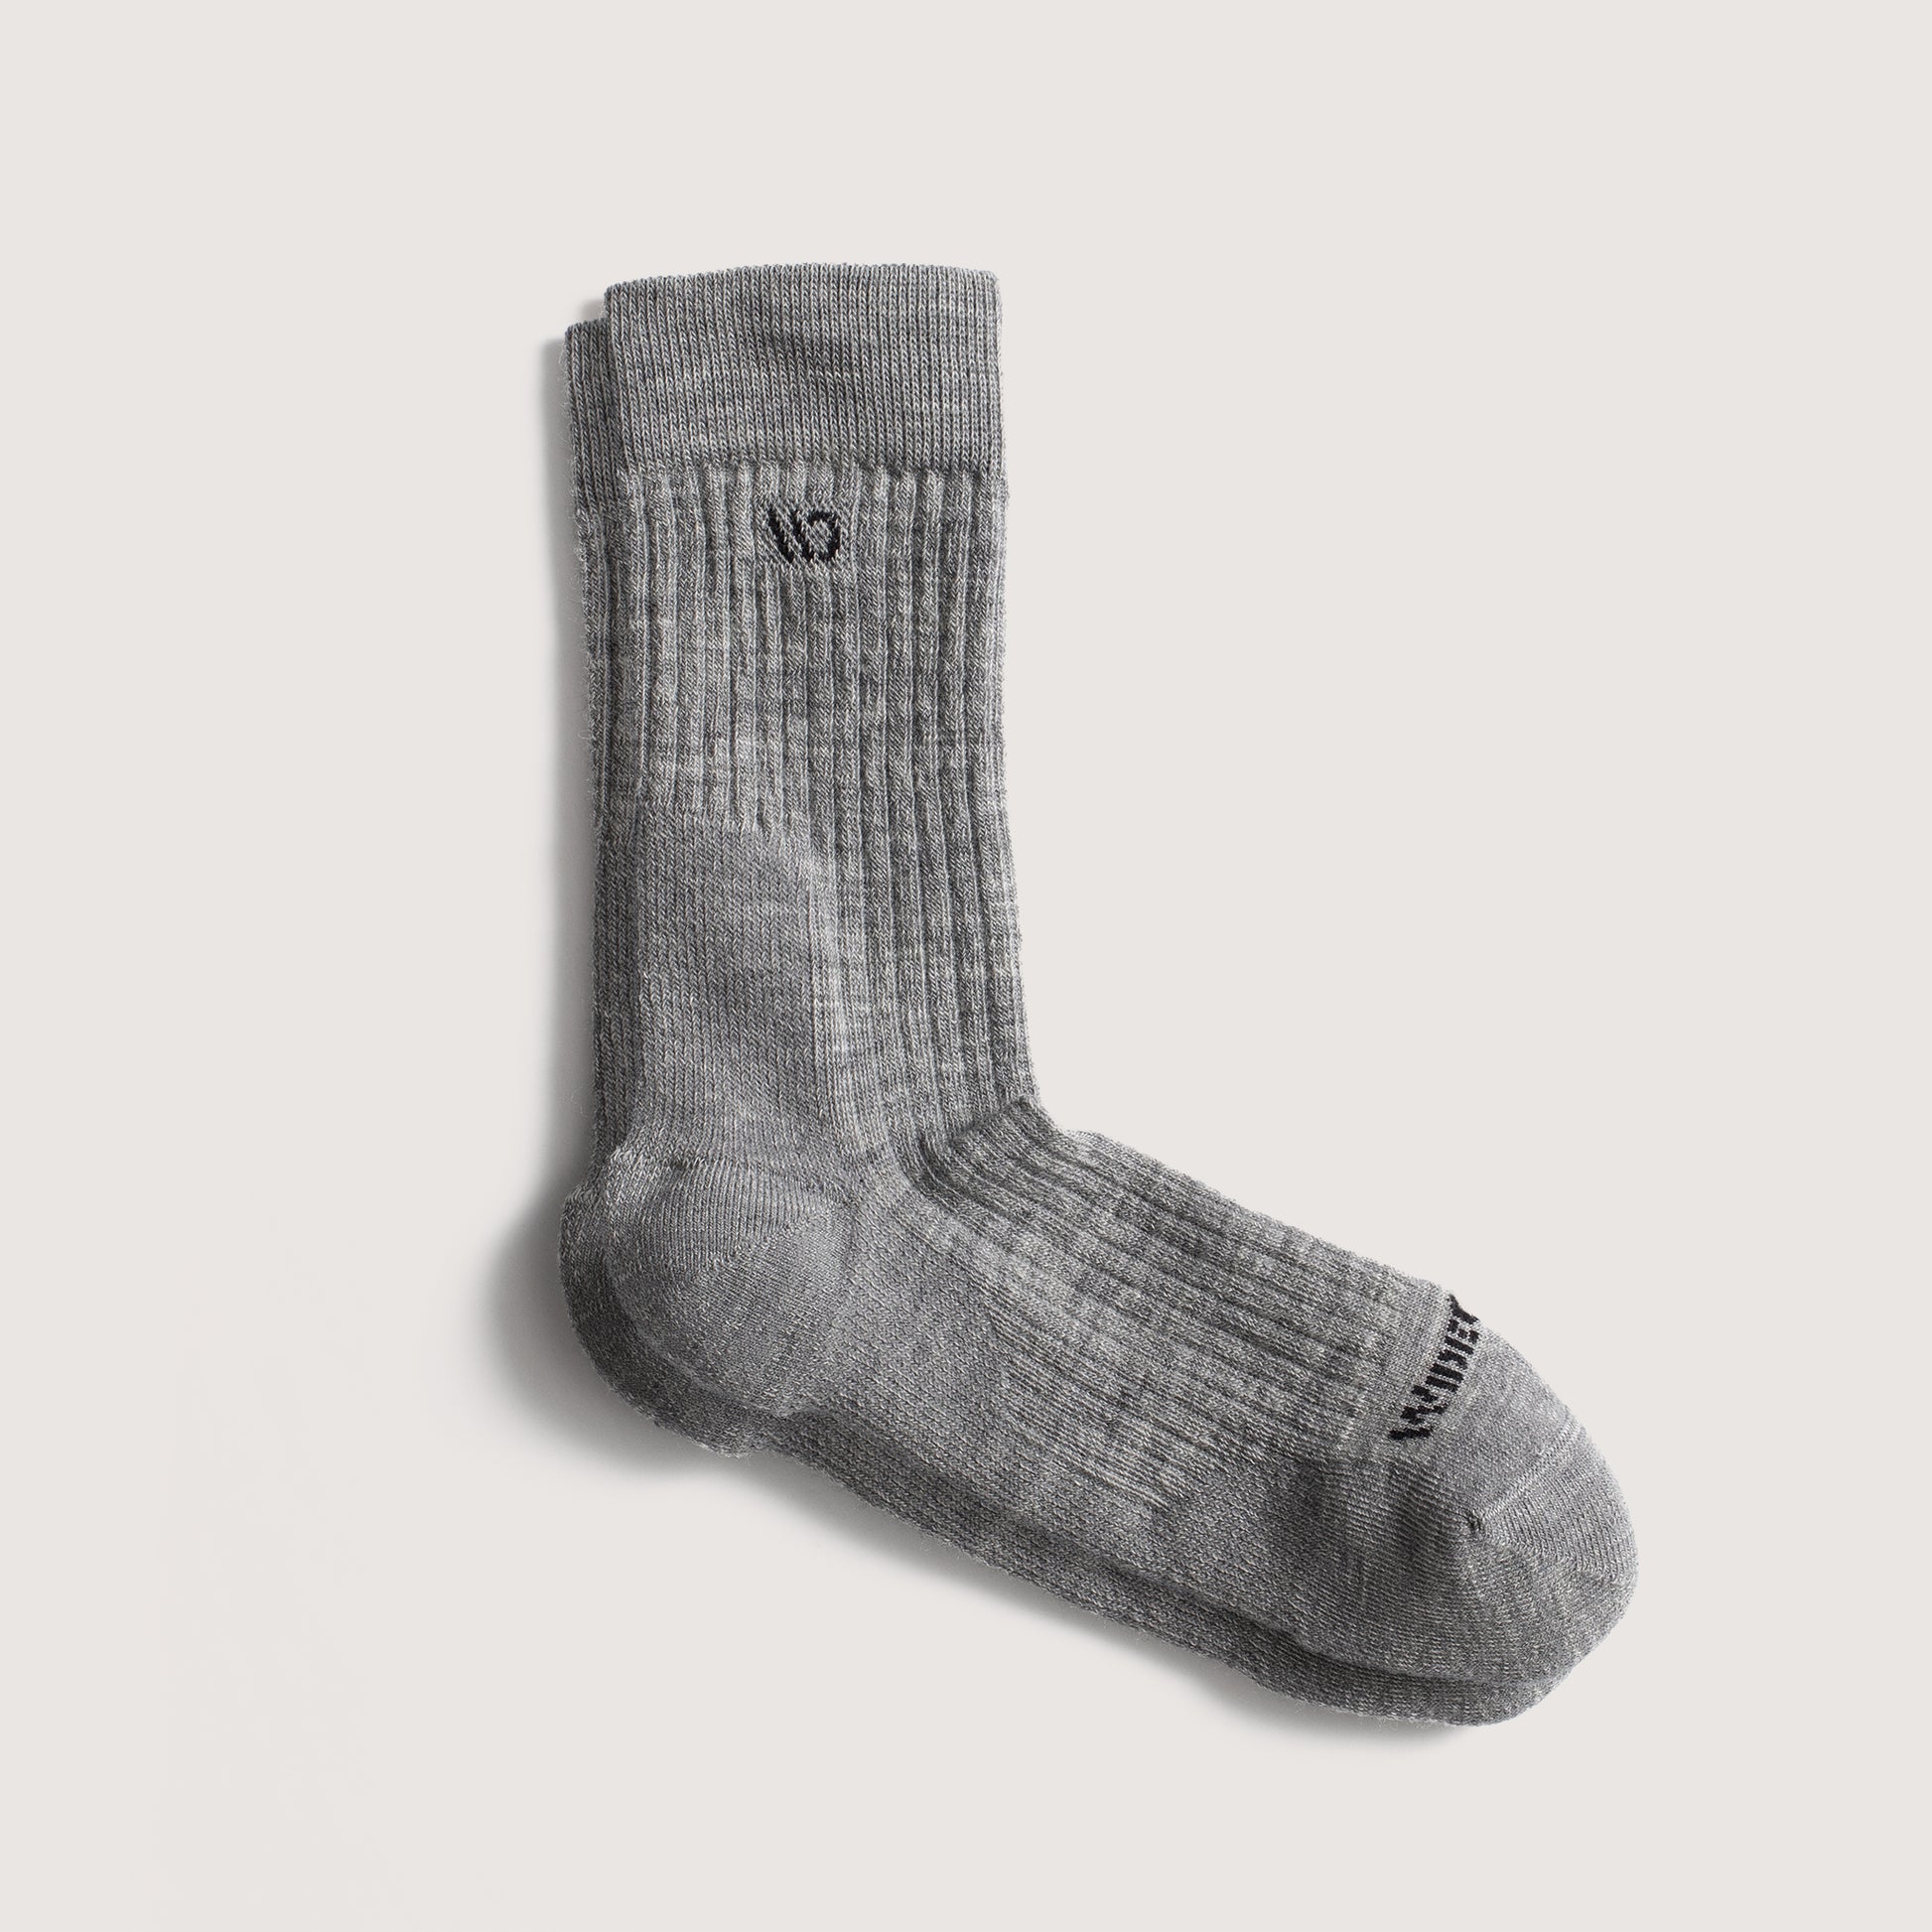 Flat socks, featuring black logo, with light gray body --Light Gray